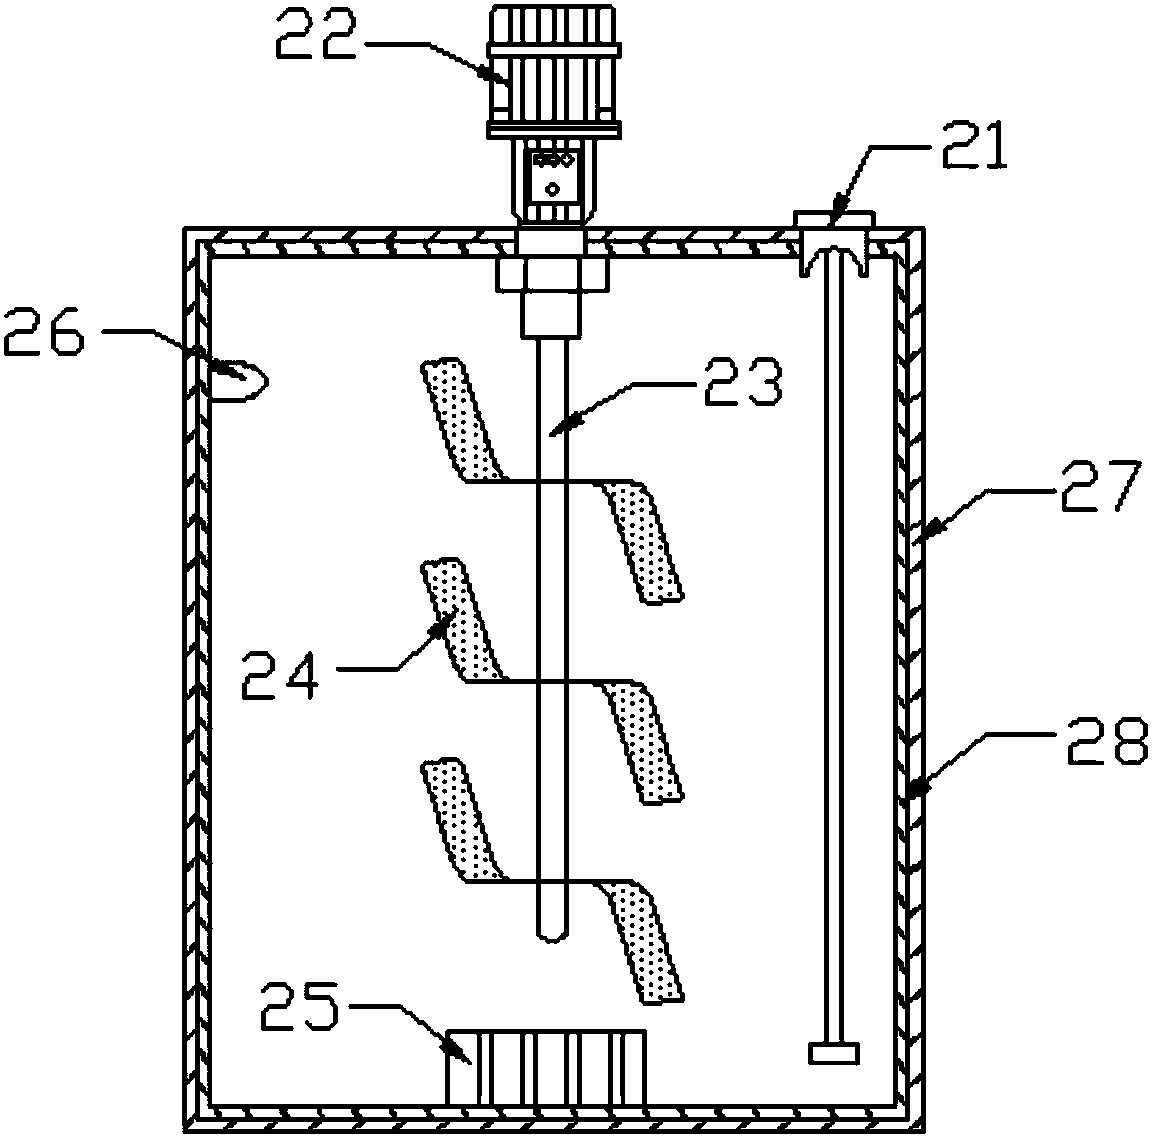 Brown sugar juice filtering device used for brown sugar processing